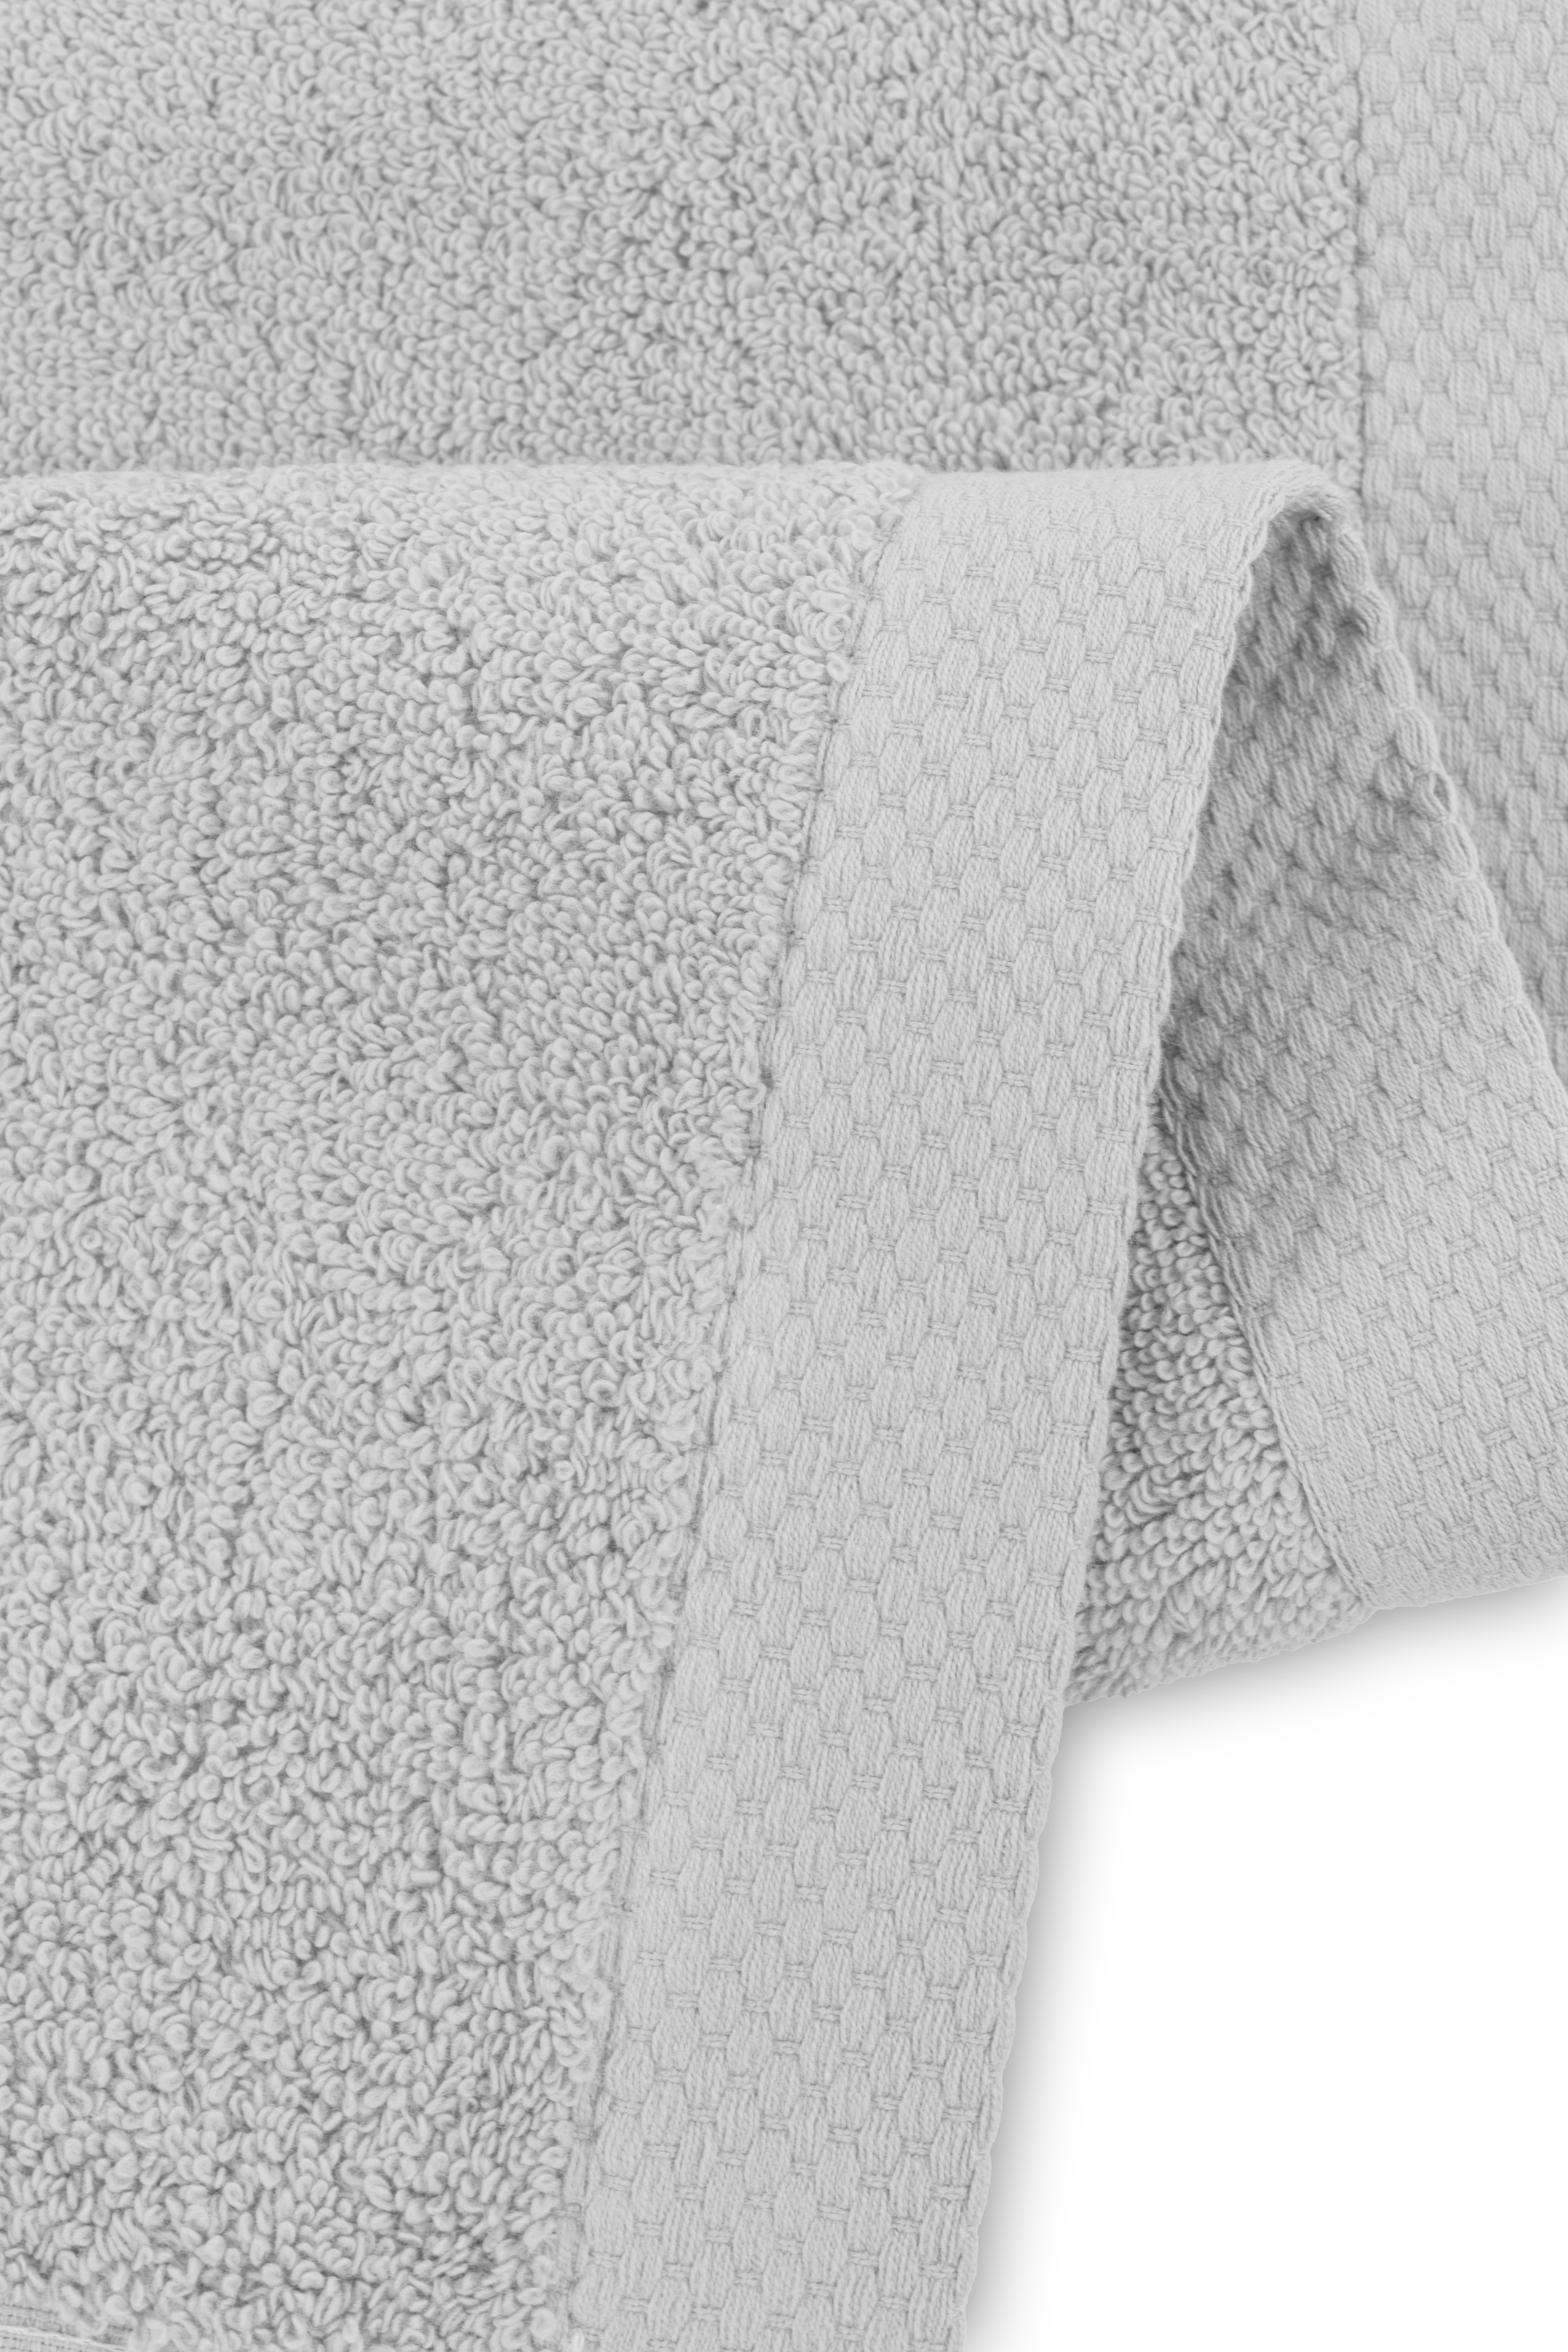 Shower towel DELUX 100x150cm, cool grey